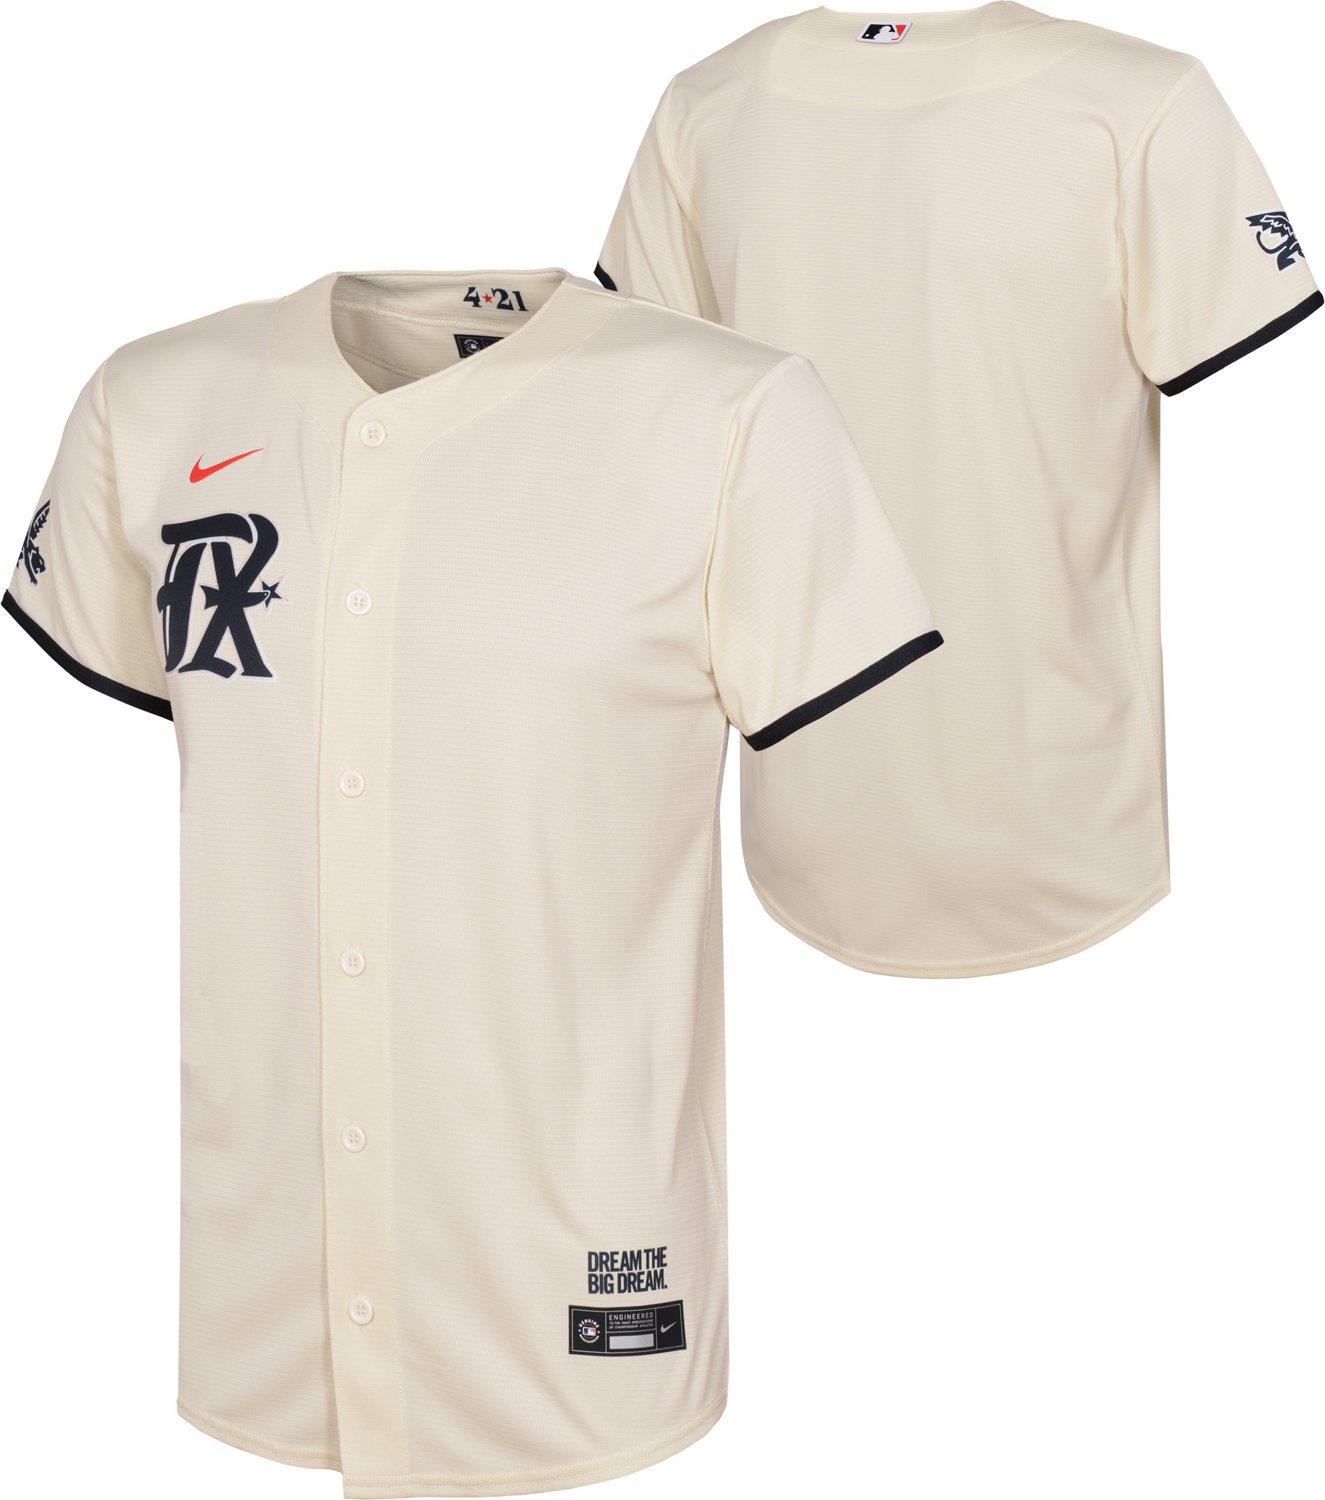 SUNA LA Dodgers 2020 World Series Champions T-Shirt Size Small New